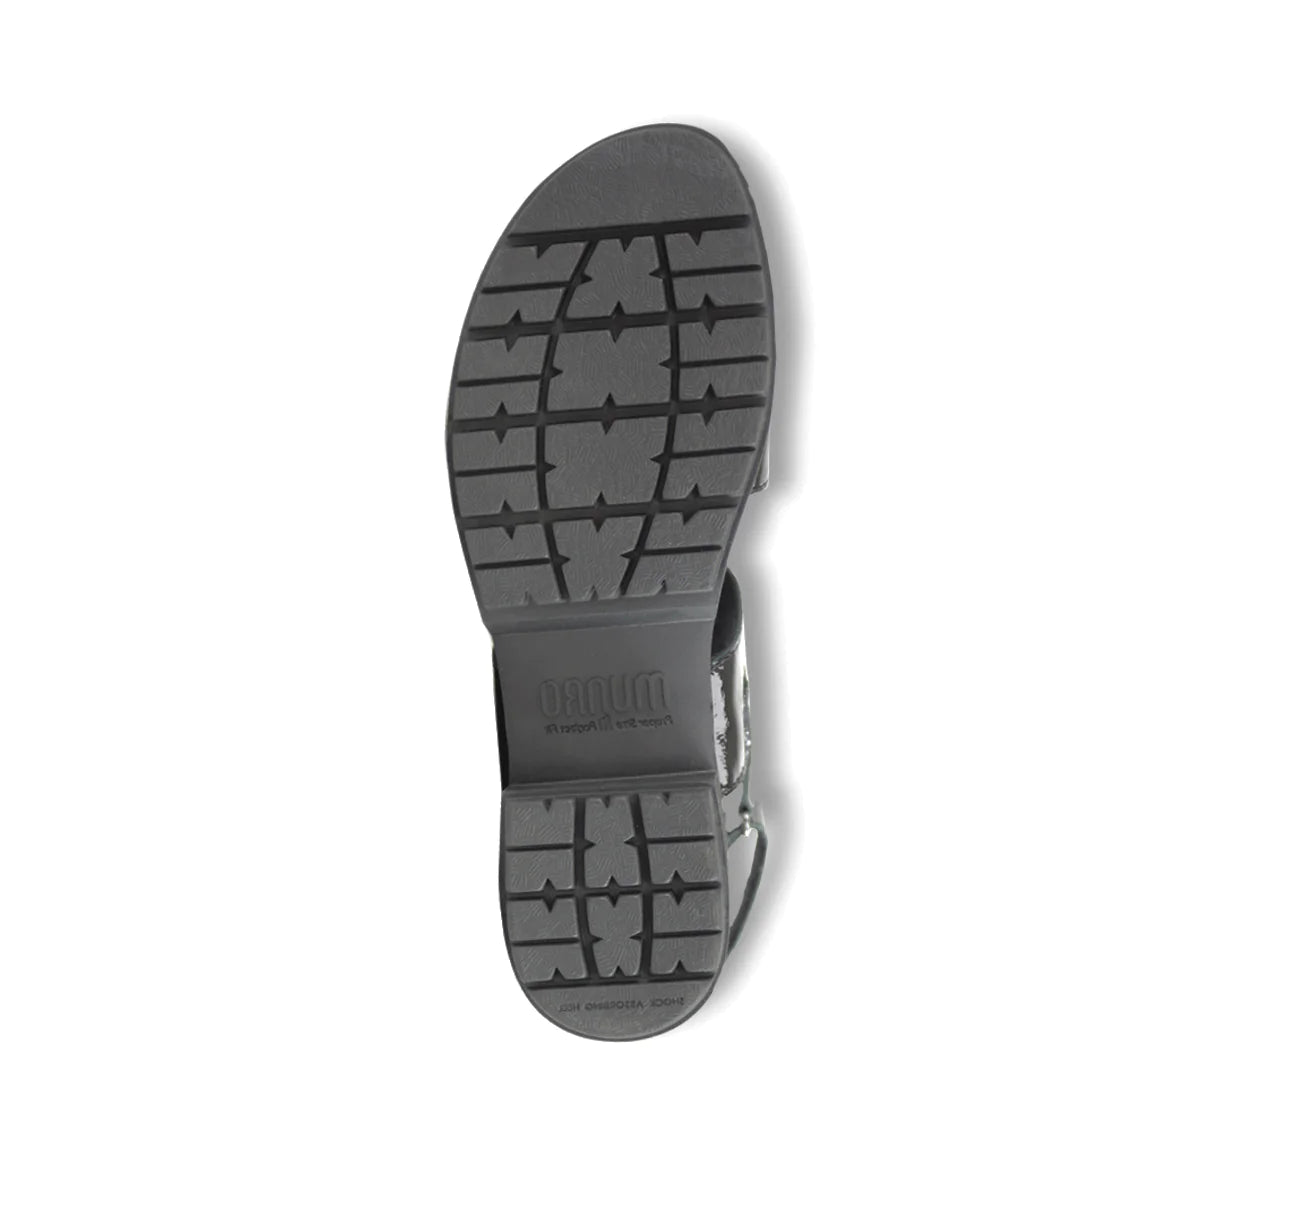 Women's Munro Teagan Patent Leather Sandals - Black Crinkle